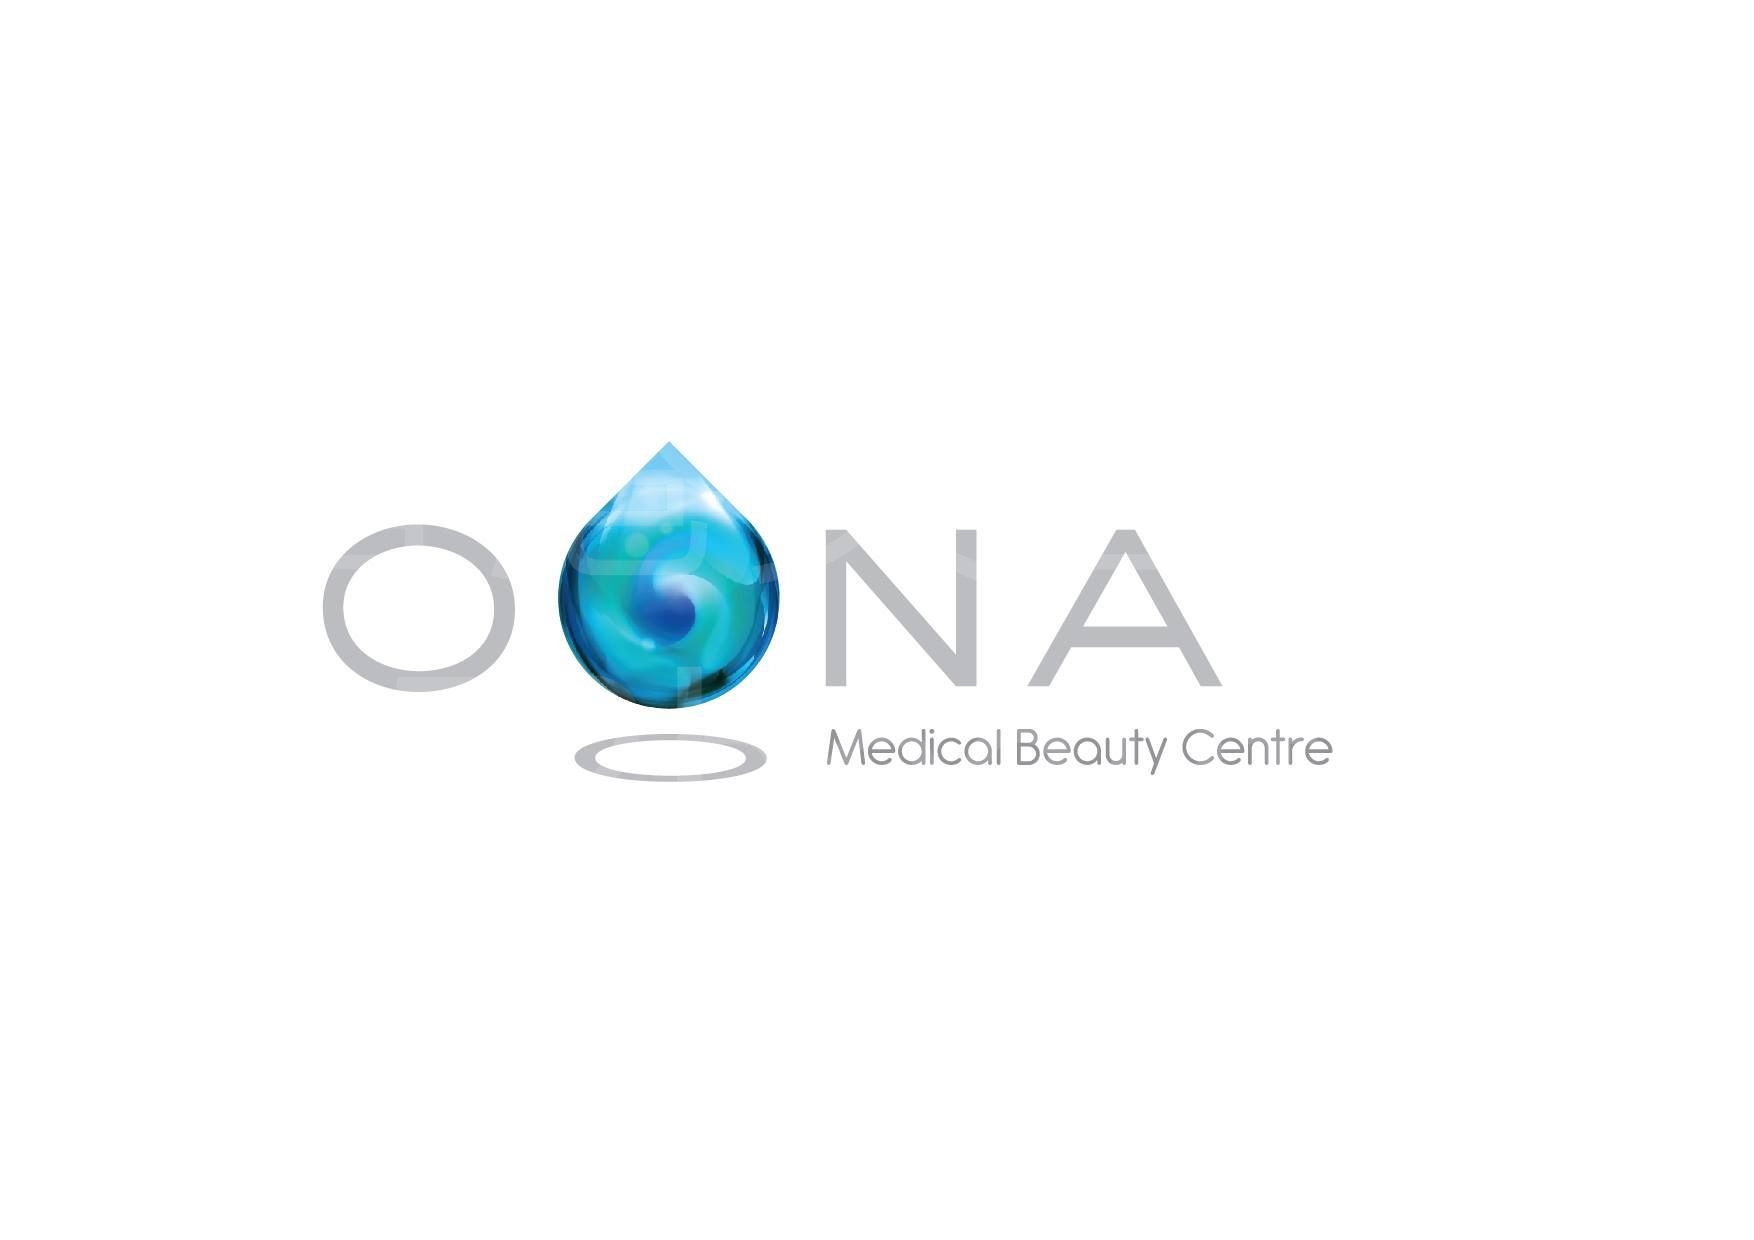 Optical Aesthetics: OONA Medical Beauty Centre